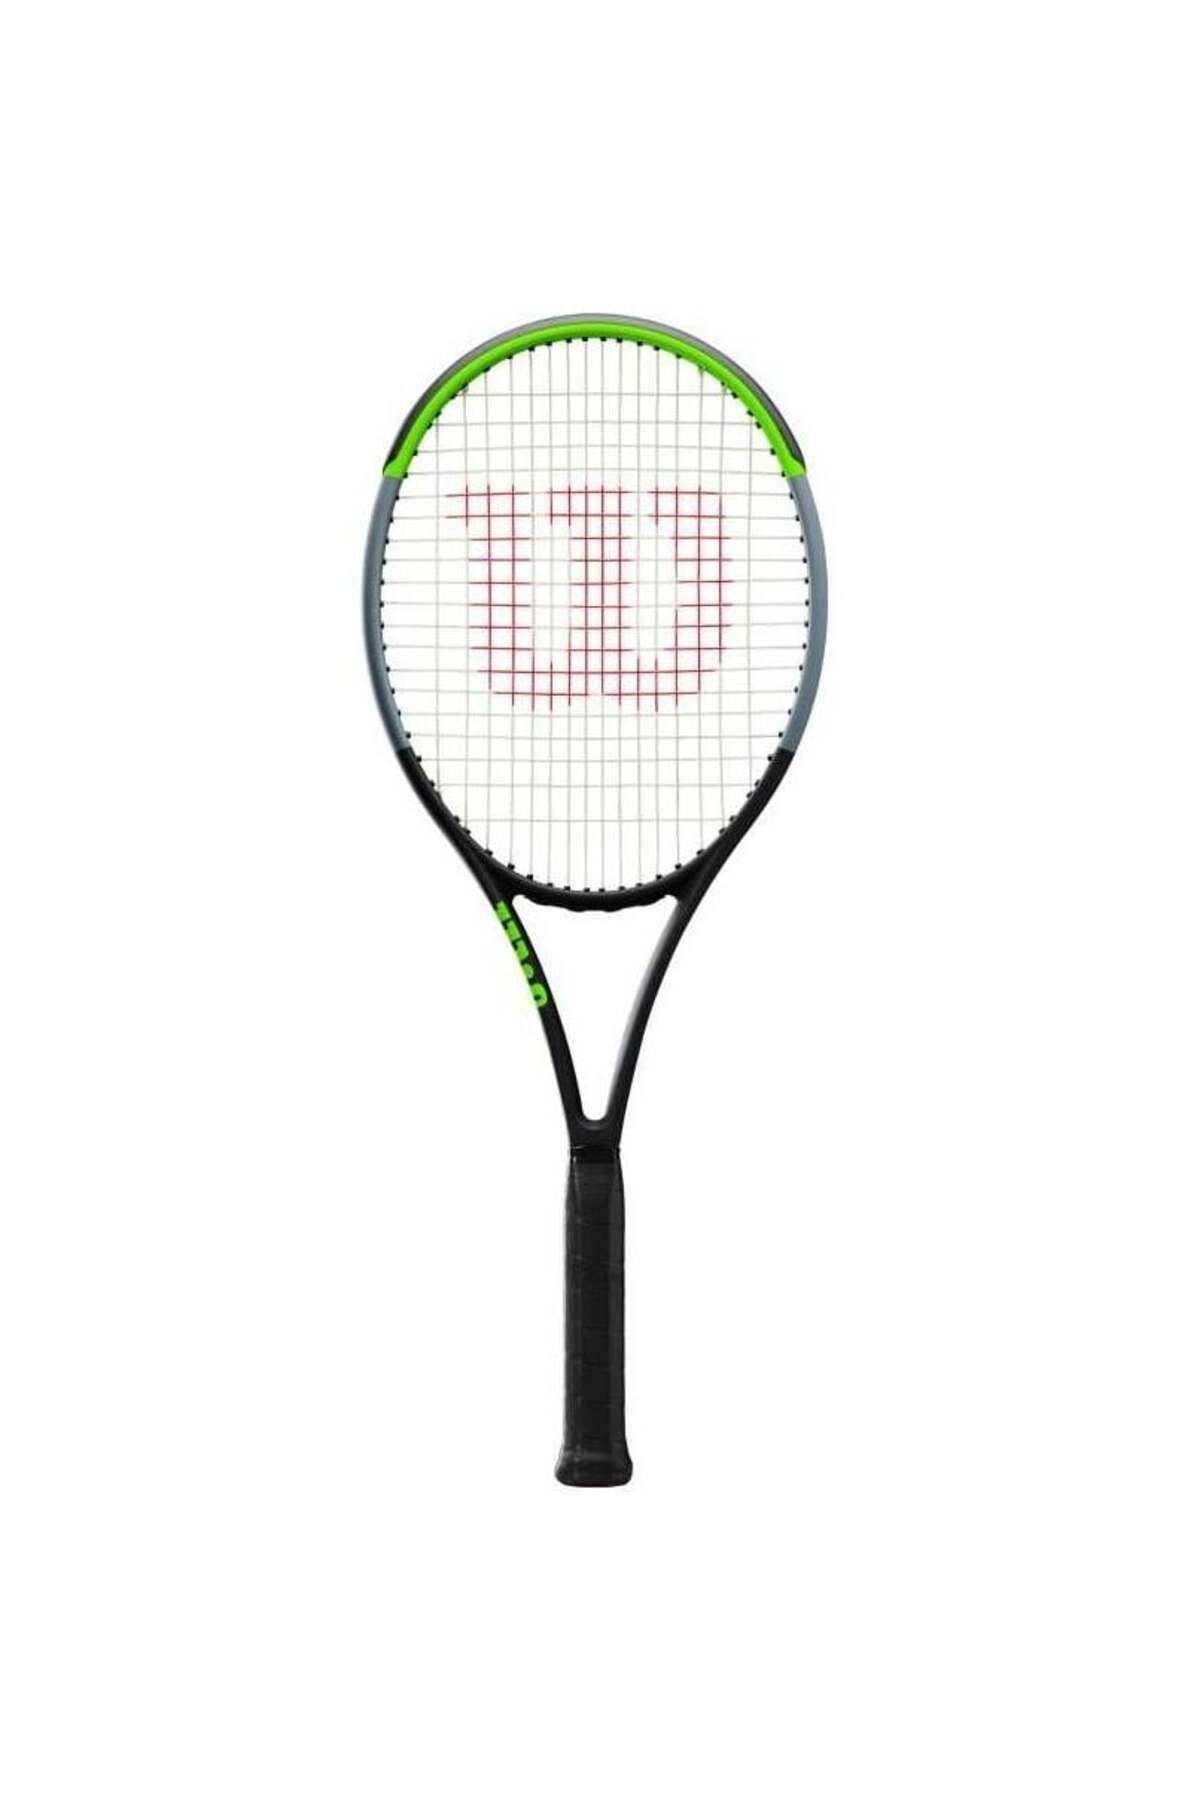 Wilson Blade 100l V7 Tenis Raketi Wr014010